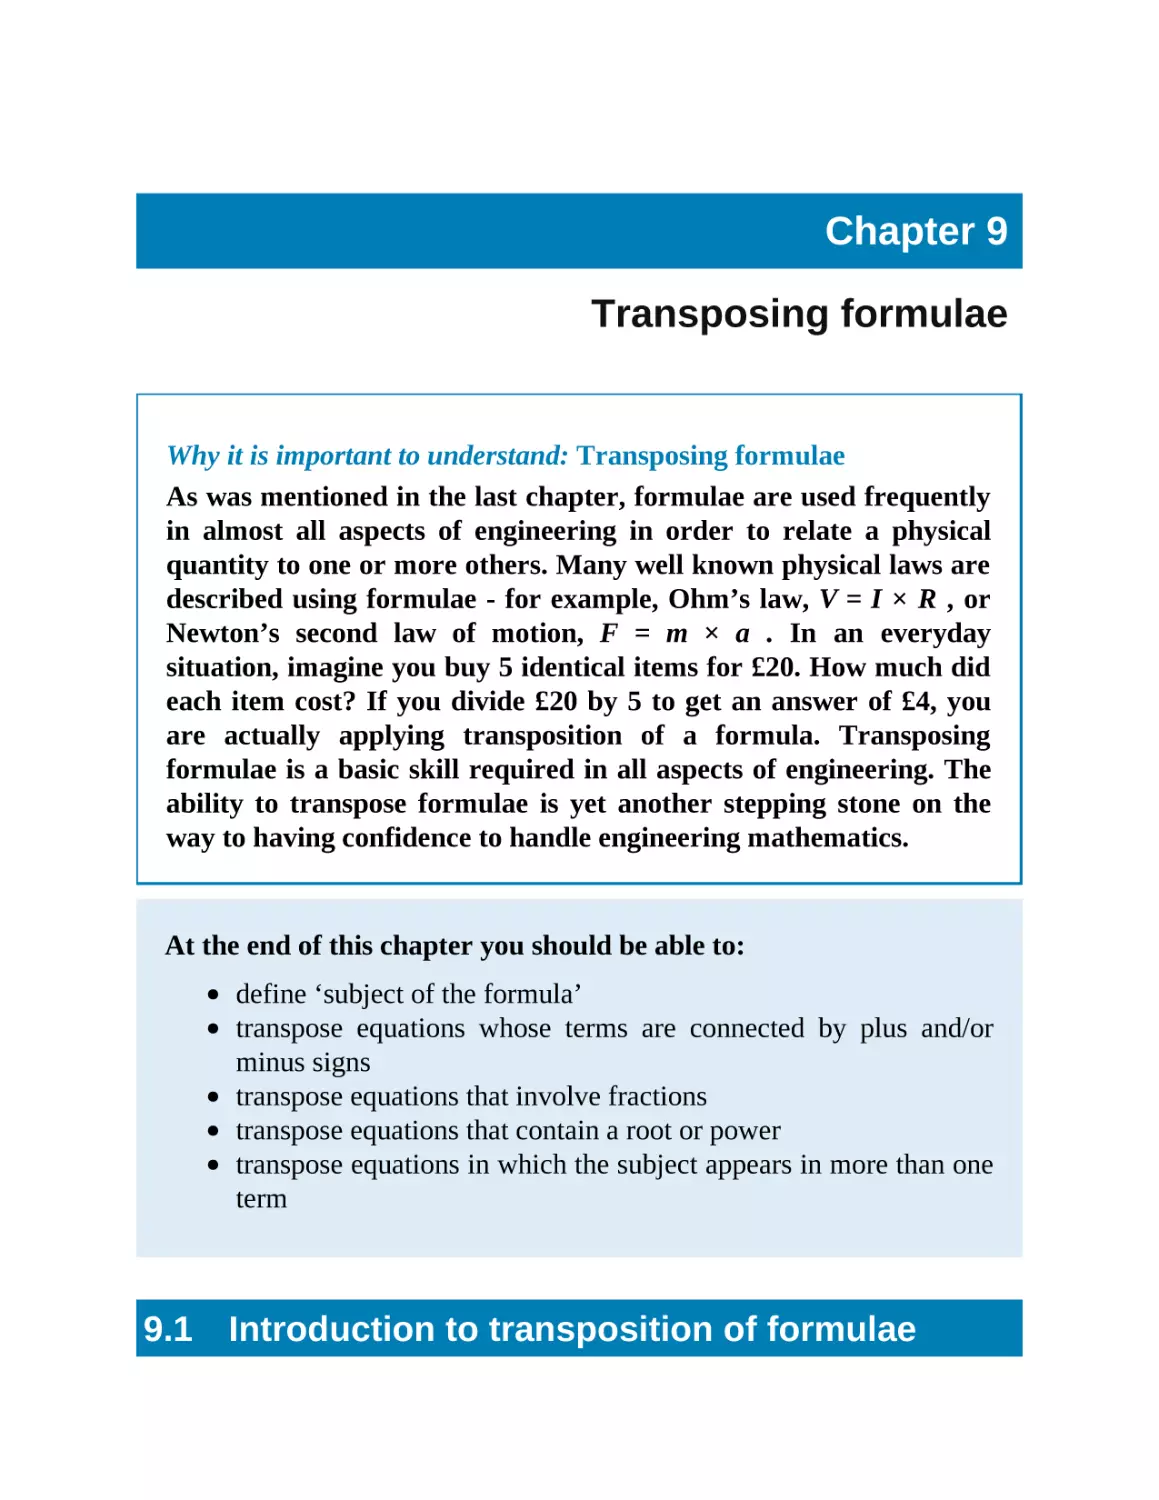 9 Transposing formulae
9.1 Introduction to transposition of formulae